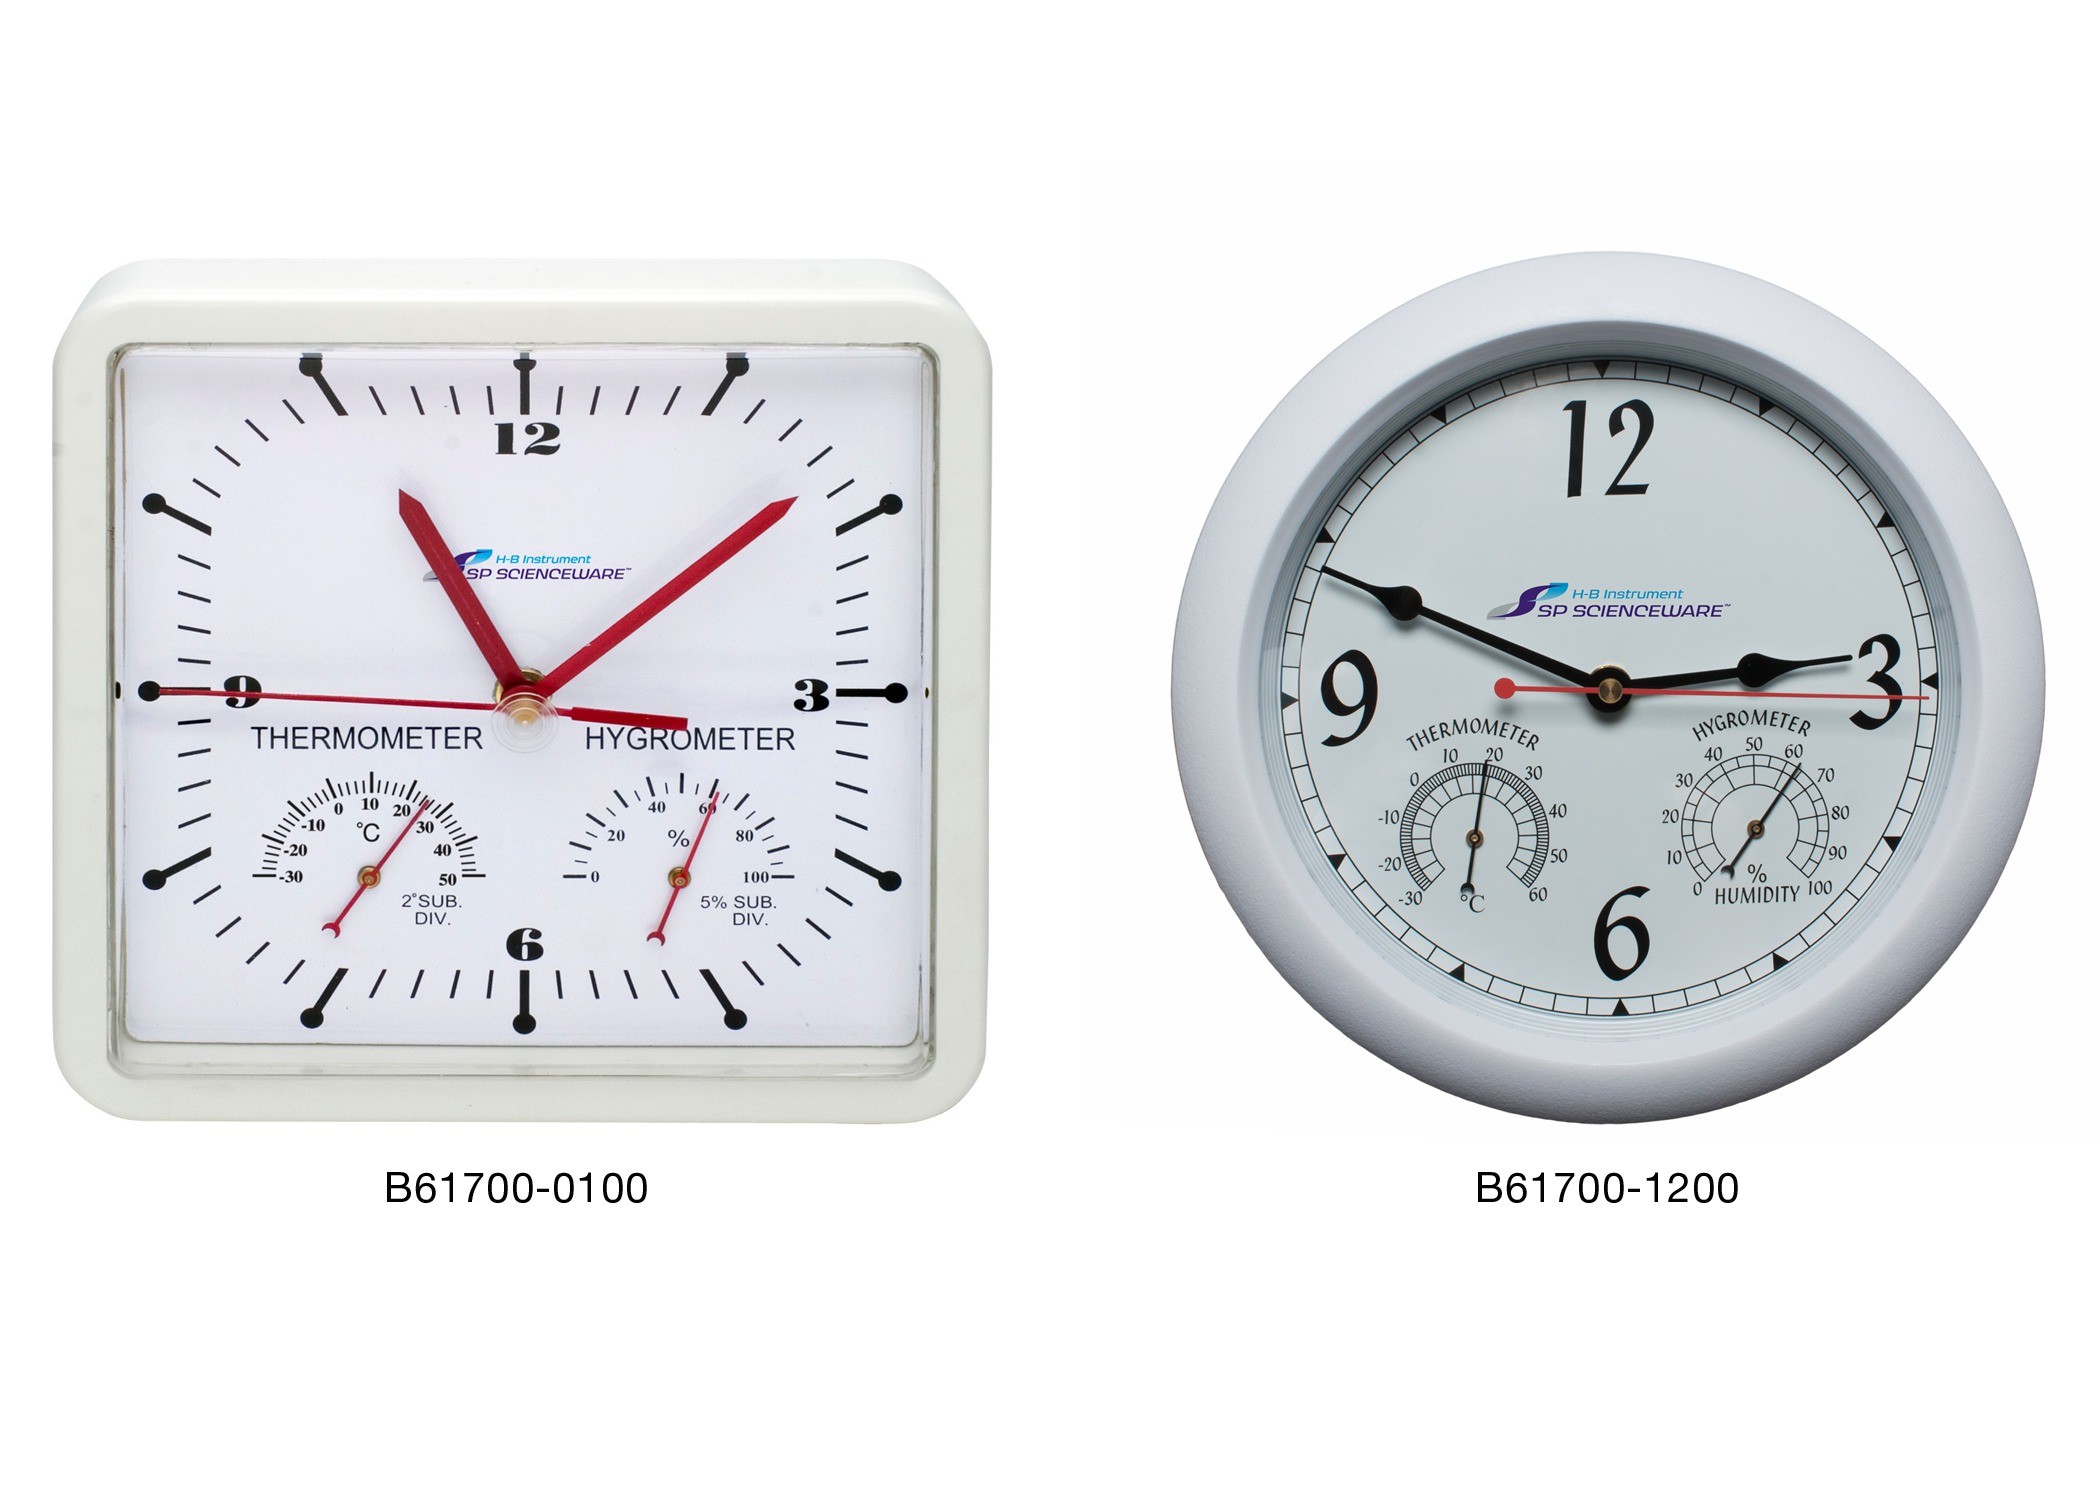 H-B DURAC Thermometer-Hygrometer Clocks